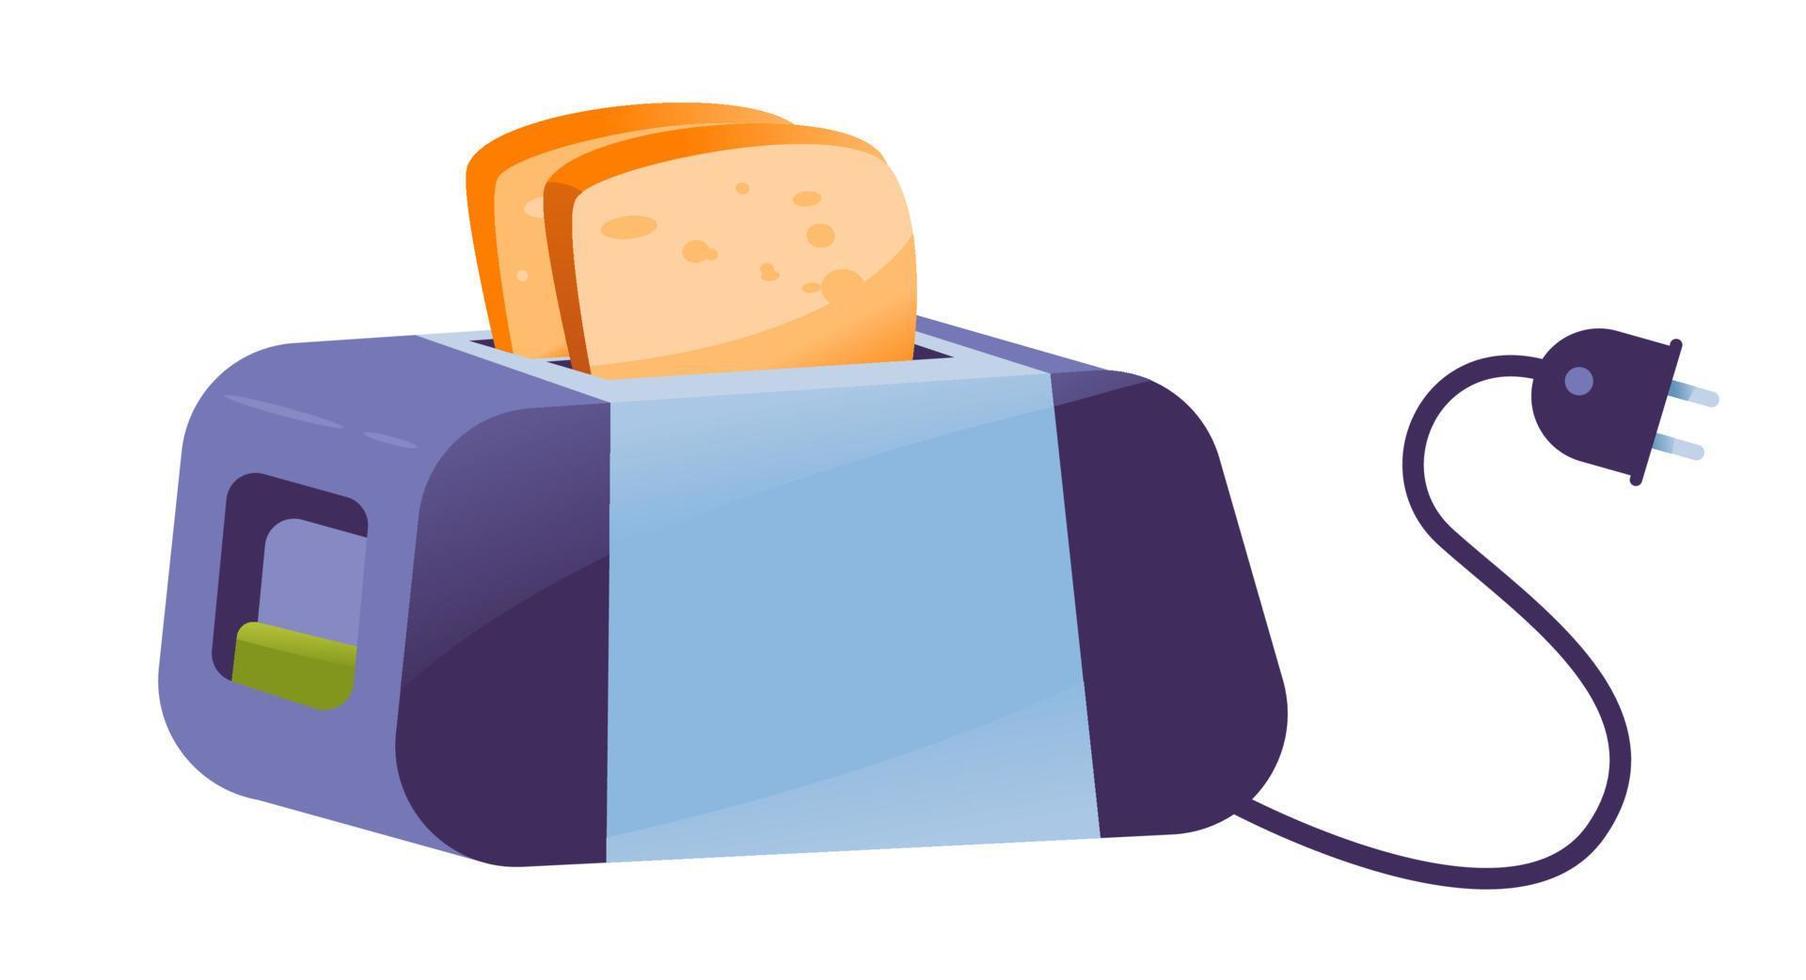 Toaster with bread inside. Vector illustration in cartoon style. Kitchen utensils.